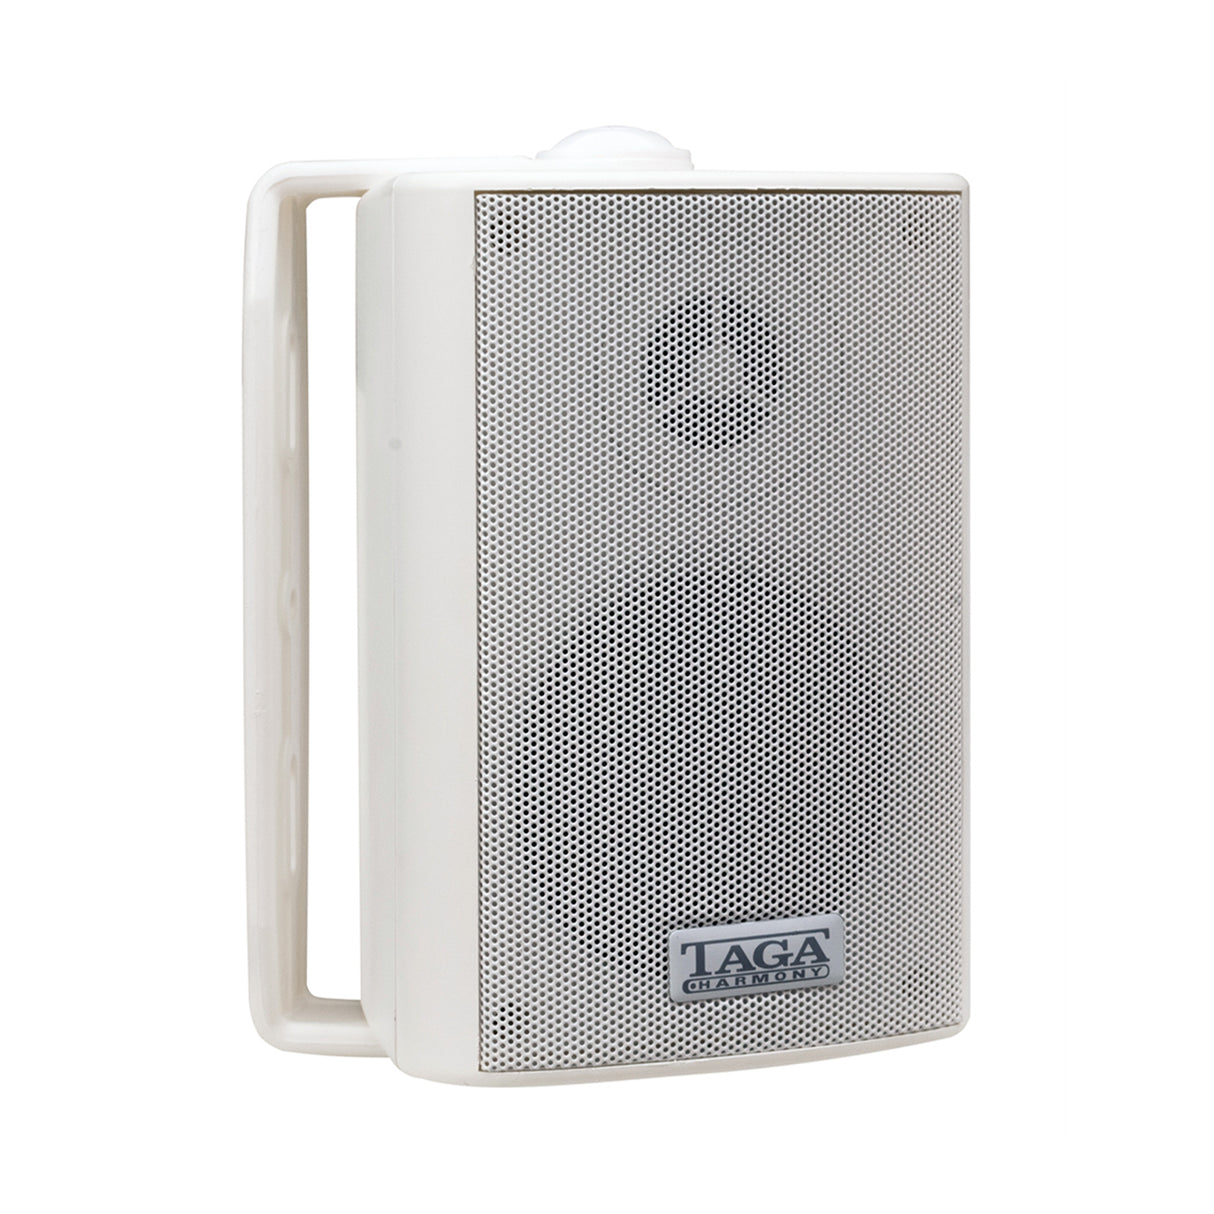 TAGA HARMONY TOS-215- outdoor/ indoor speakers (pair)